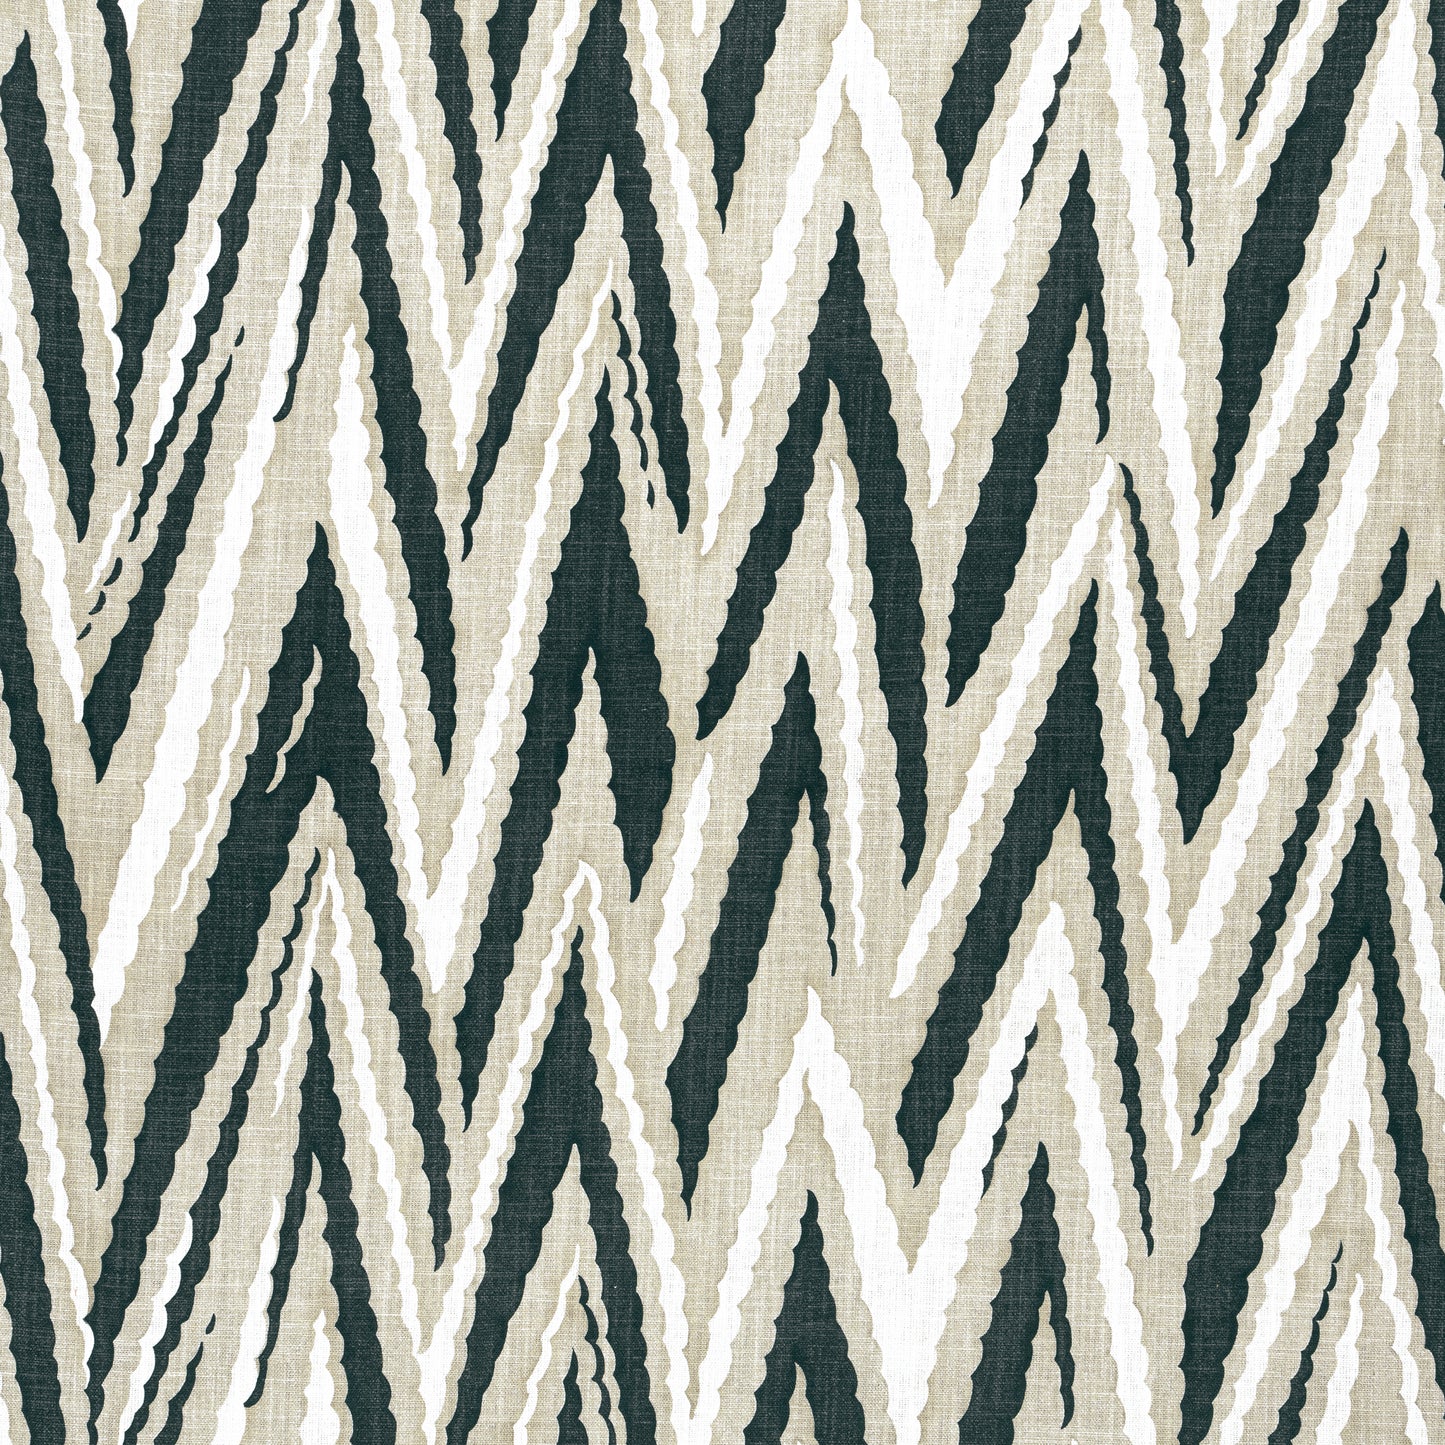 Purchase  Ann French Fabric SKU AF23139  pattern name  Highland Peak